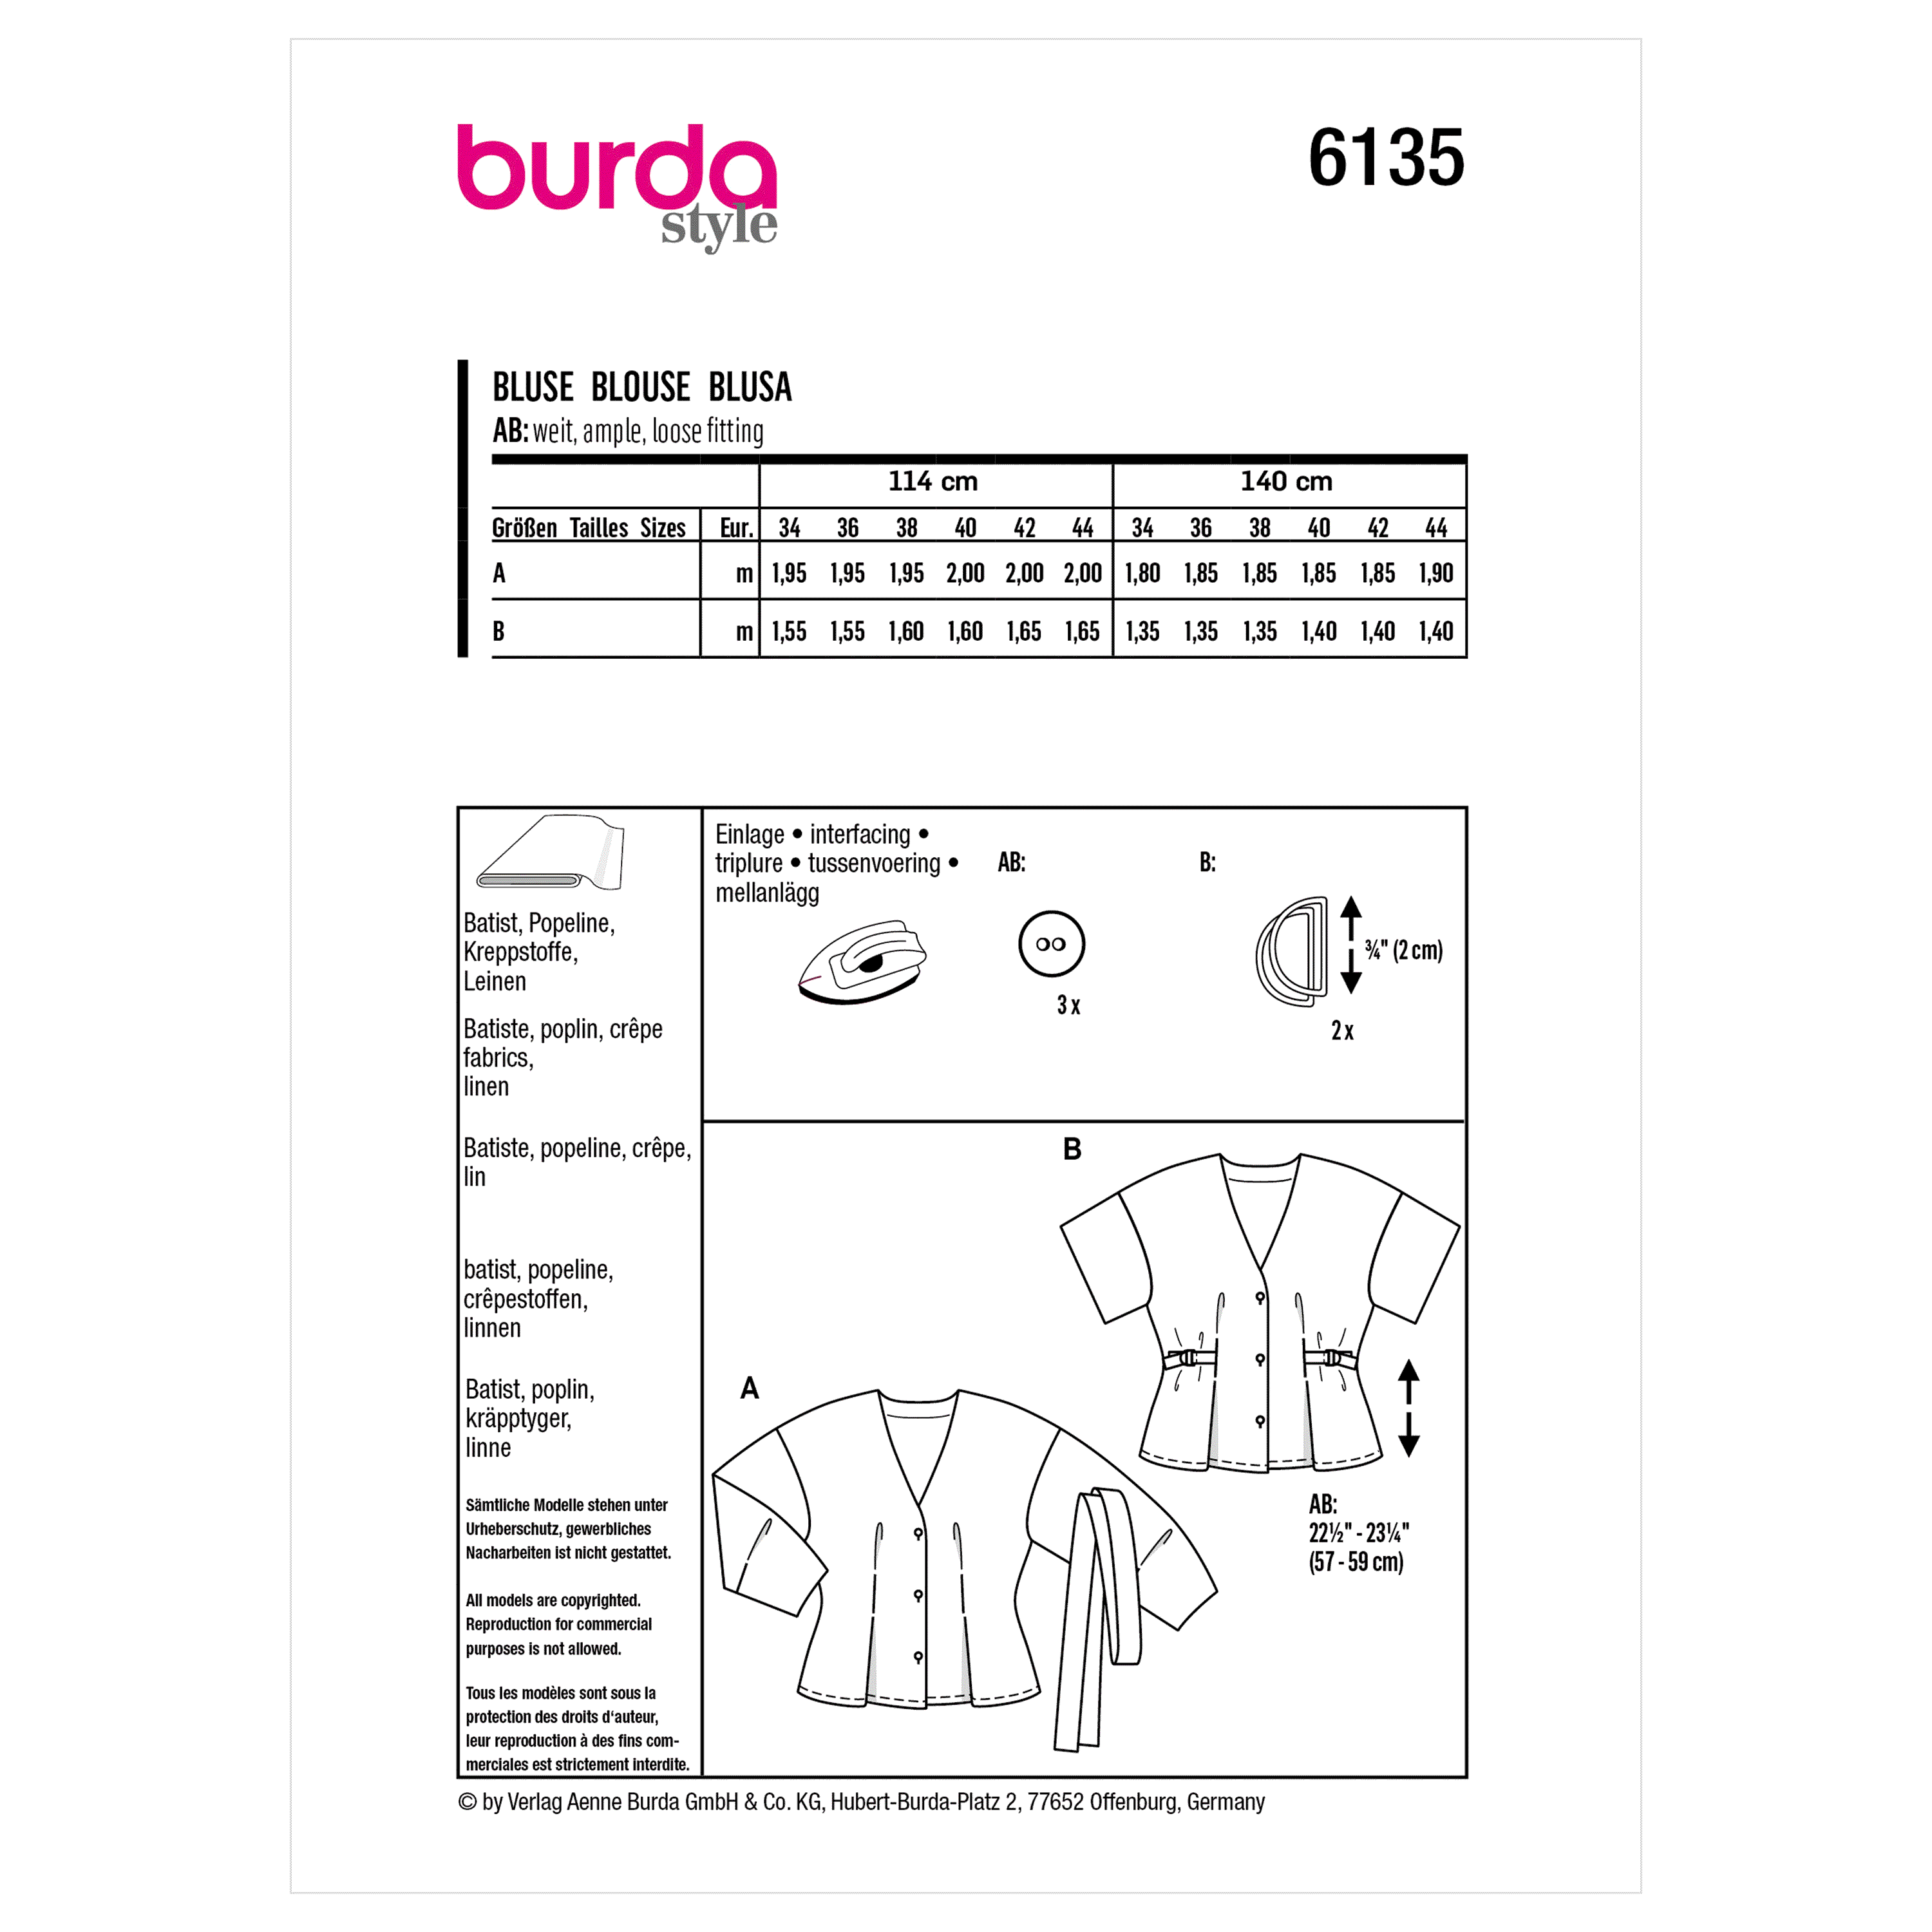 Burda Sewing Pattern 6135 Blouse from Jaycotts Sewing Supplies